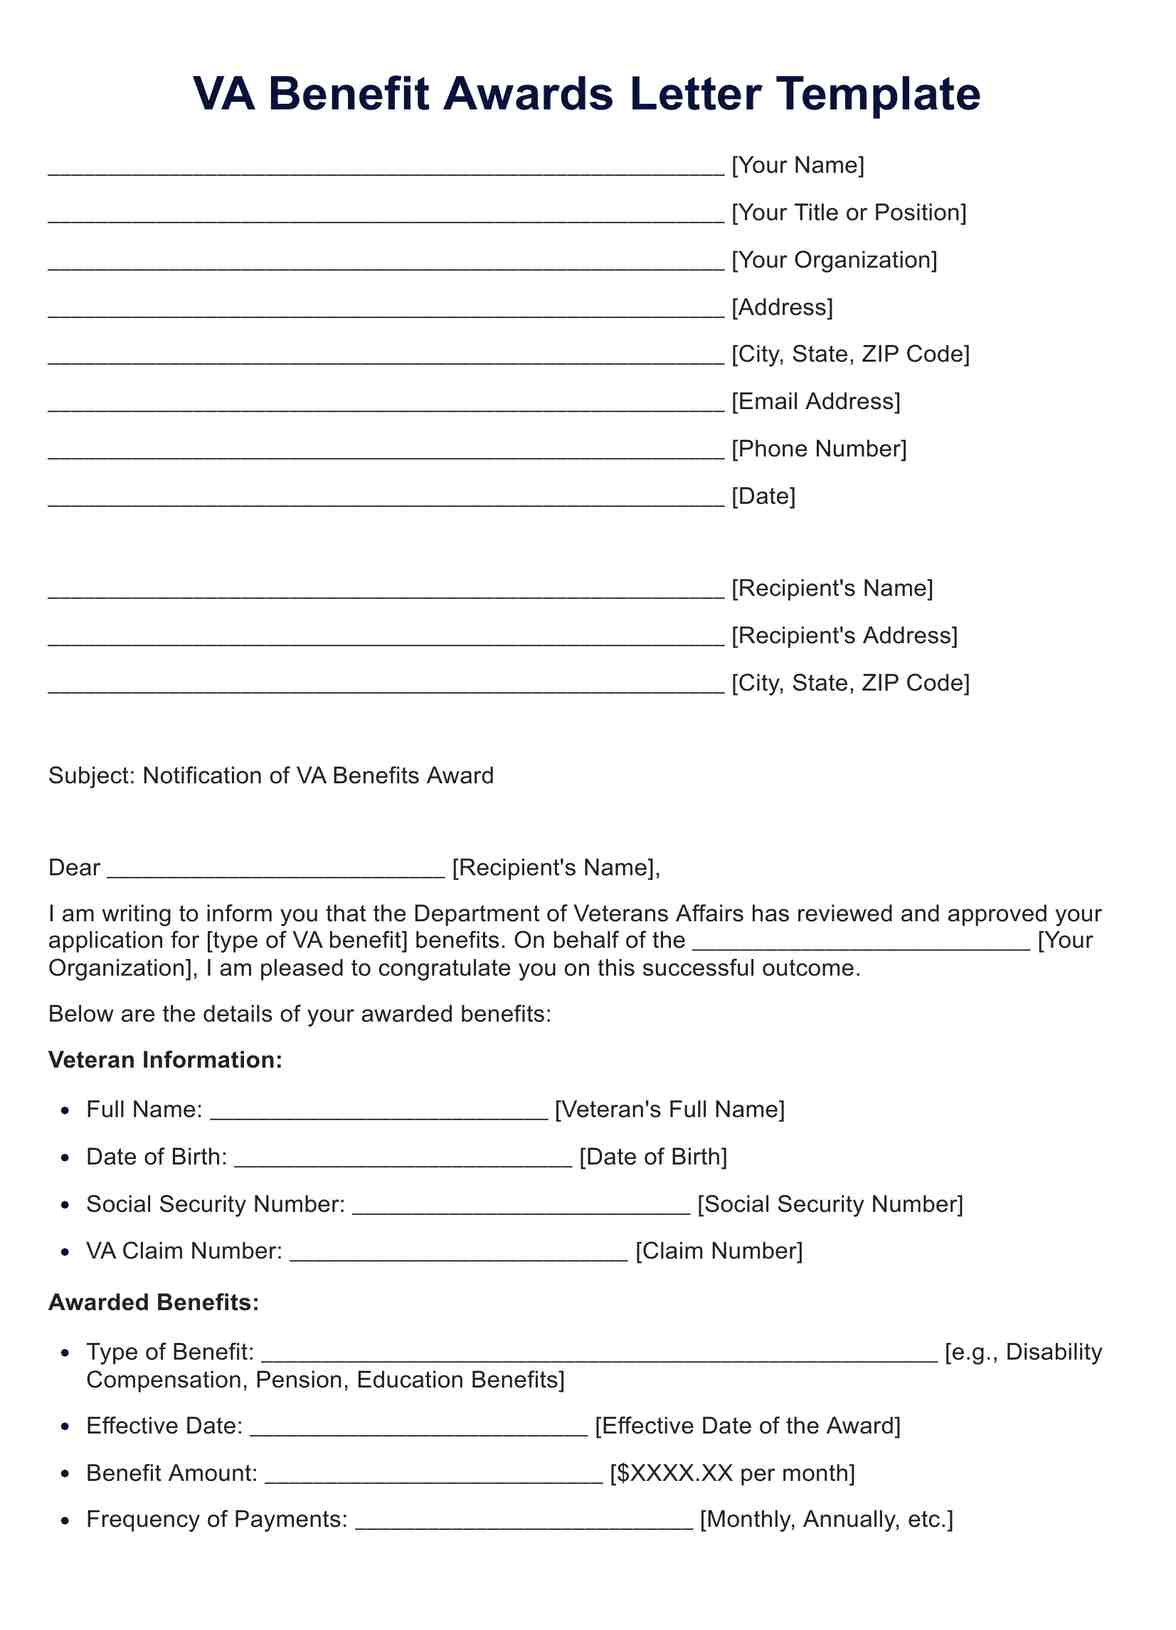 VA Benefits Award Letter PDF Example